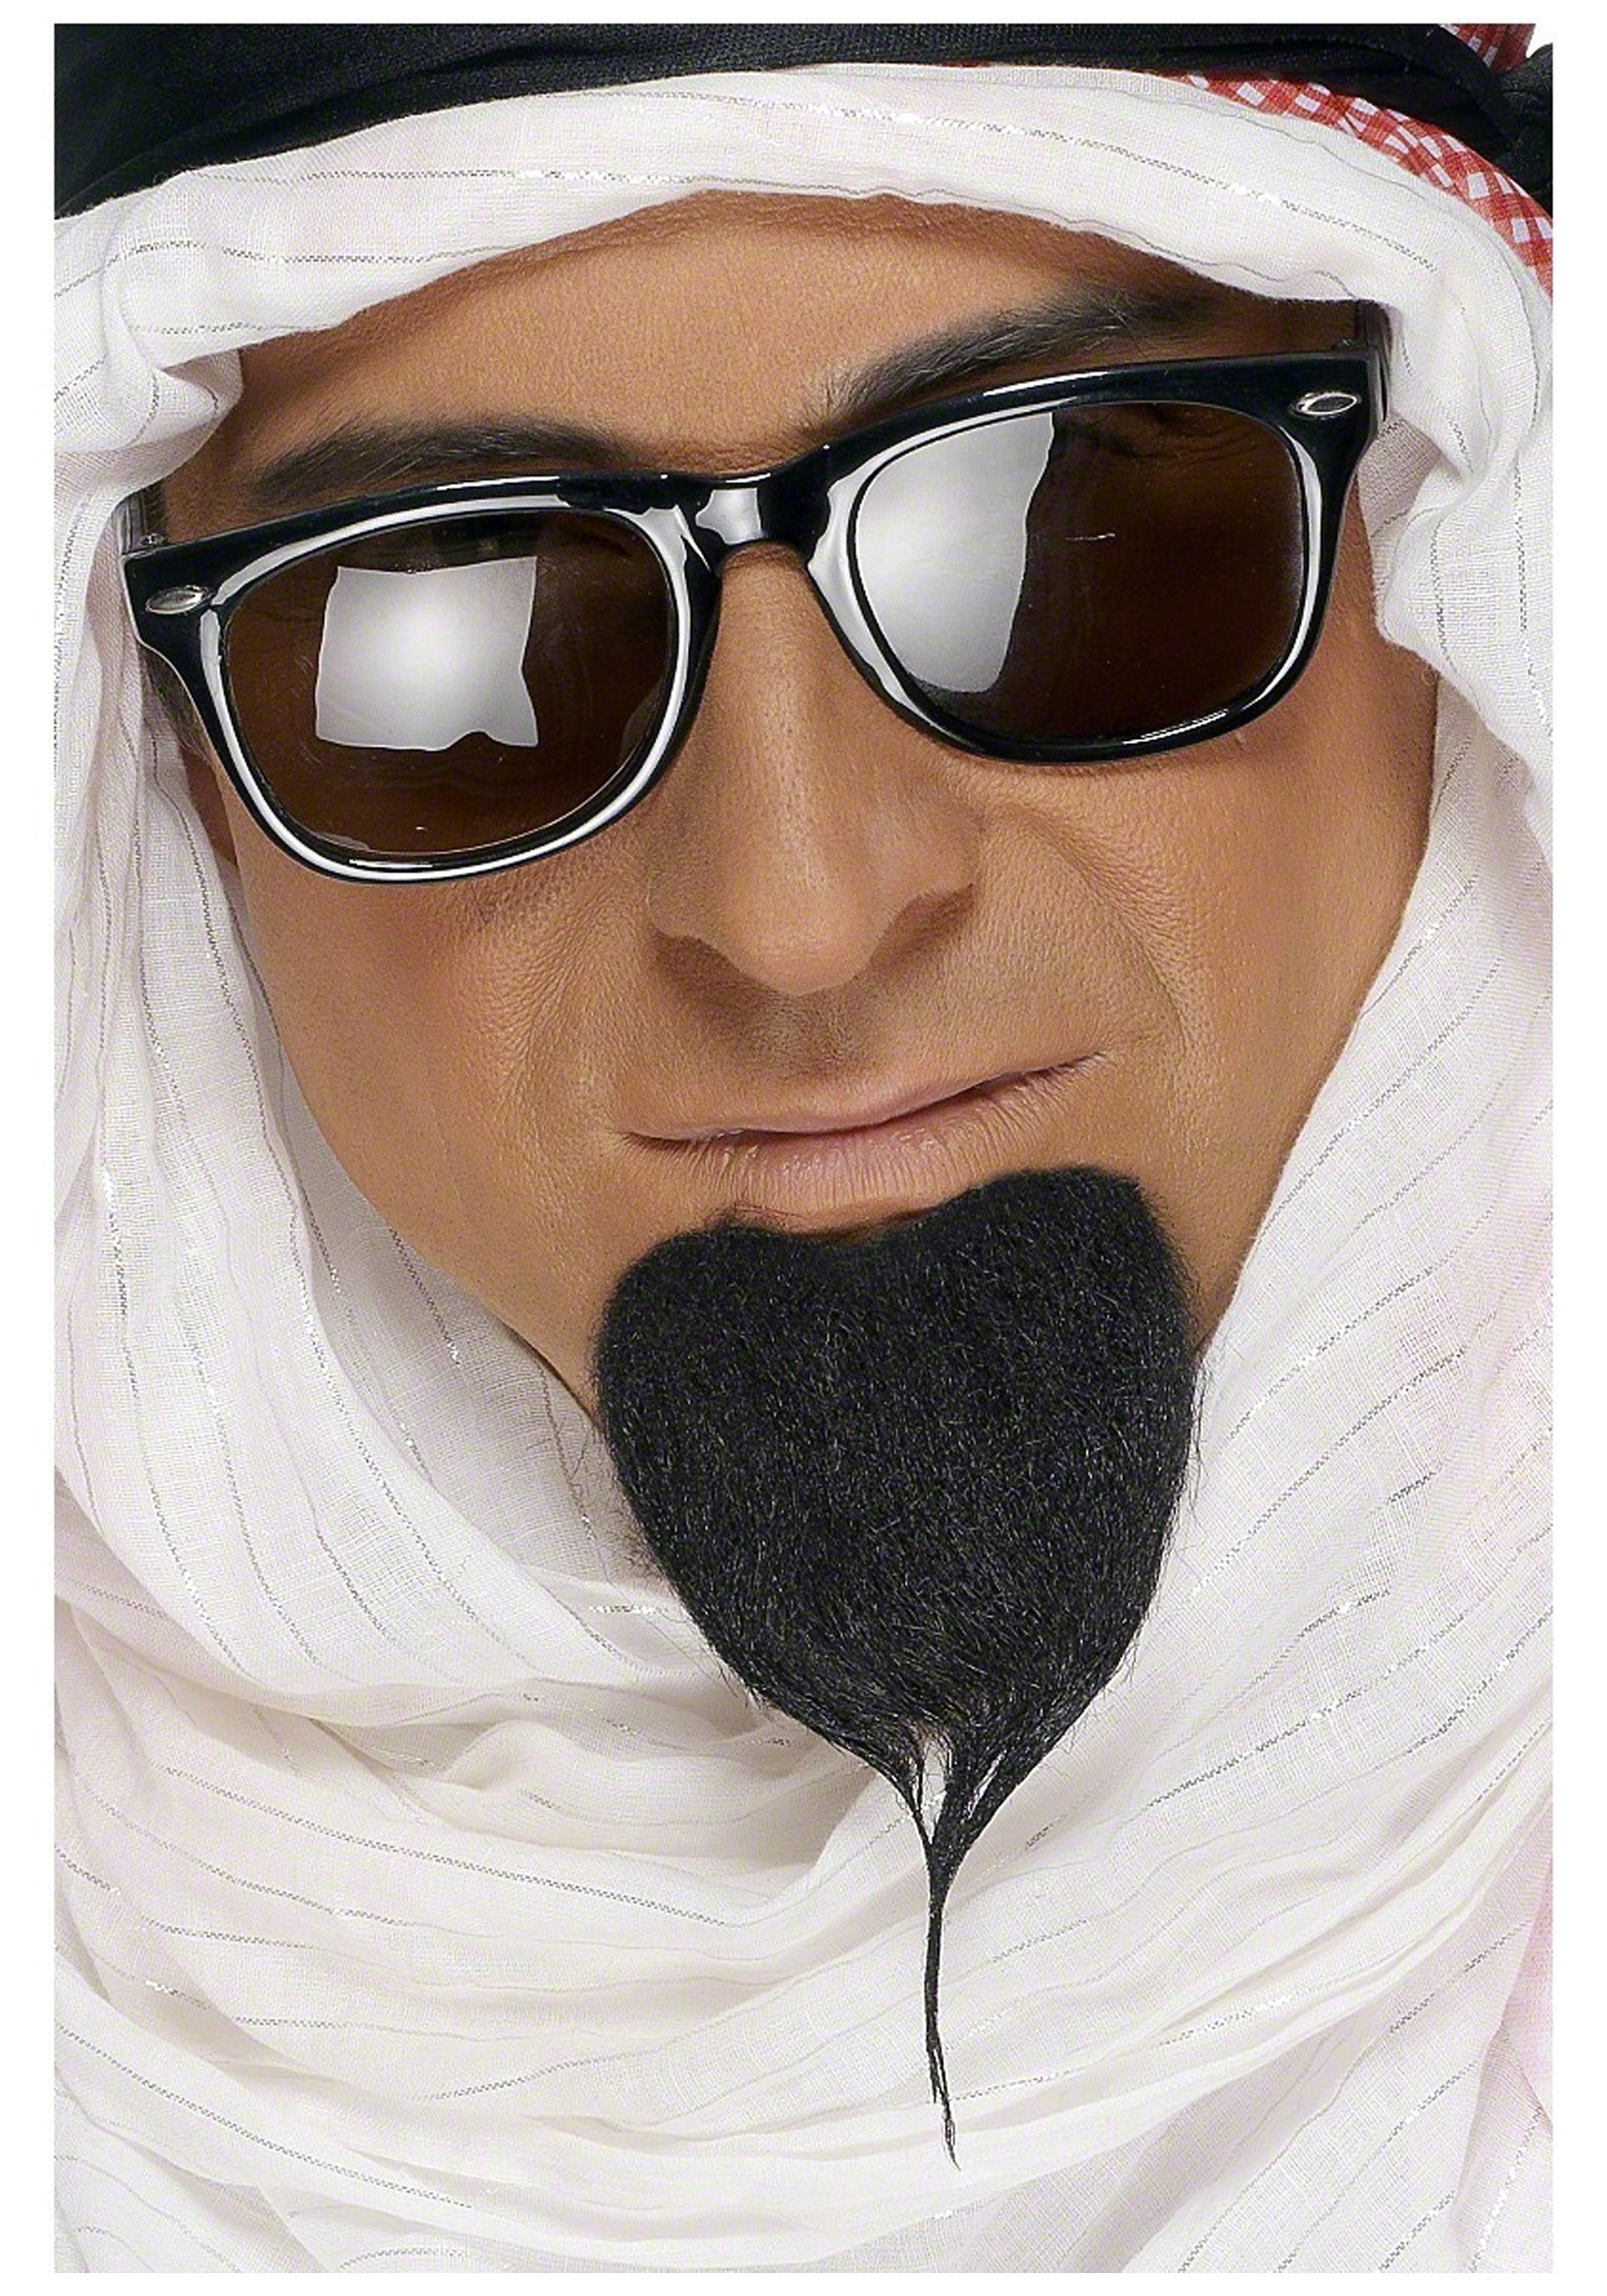 Арабская крутая. Араб в очках. Араб с бородой. Крутой араб. Шейх в очках.